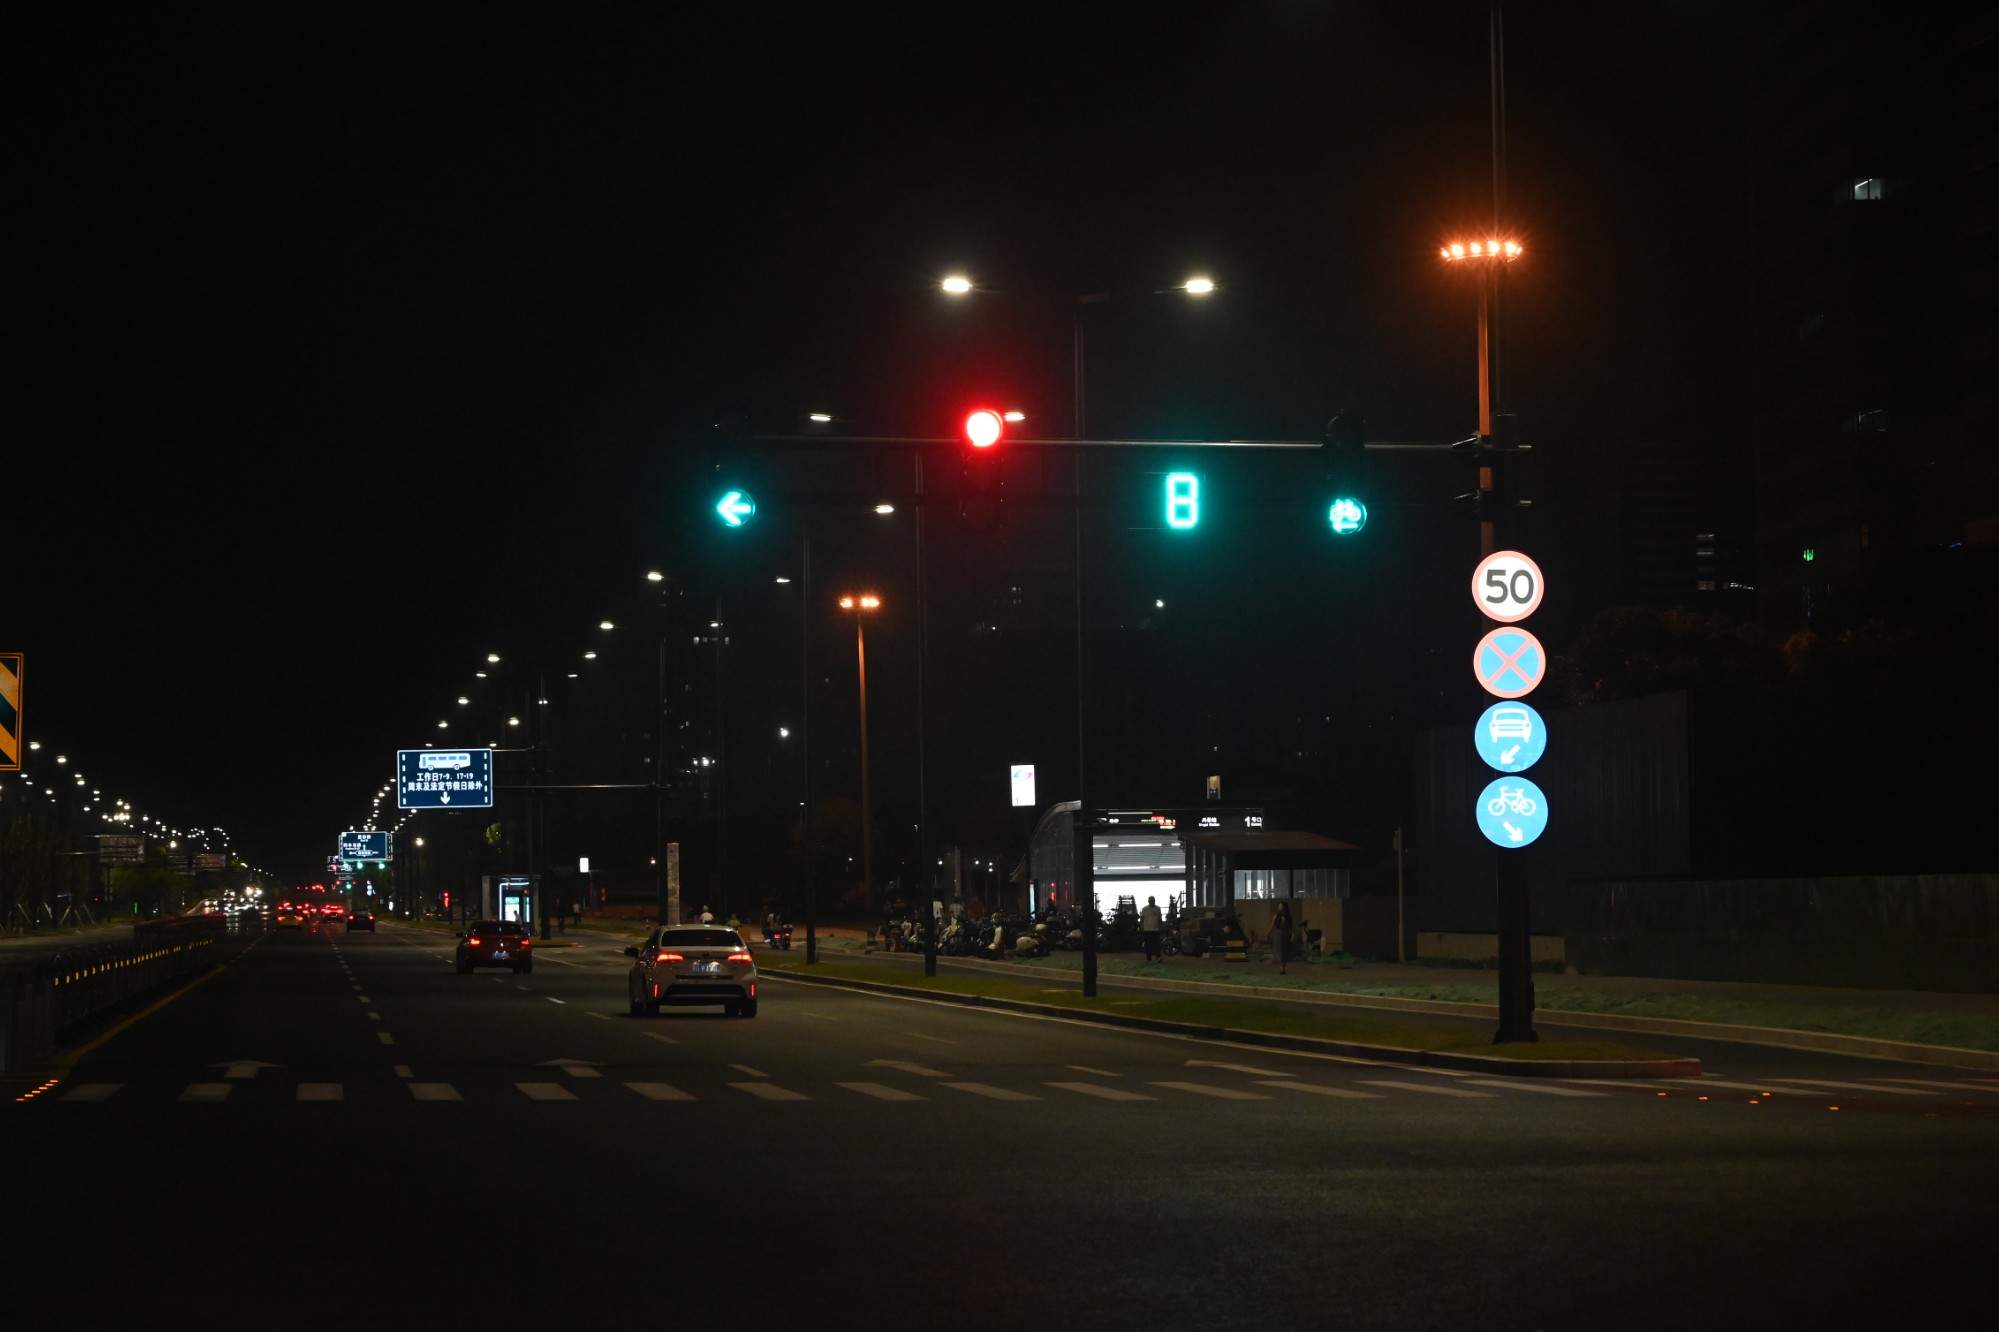 LED Internally Illuminated Road Signs